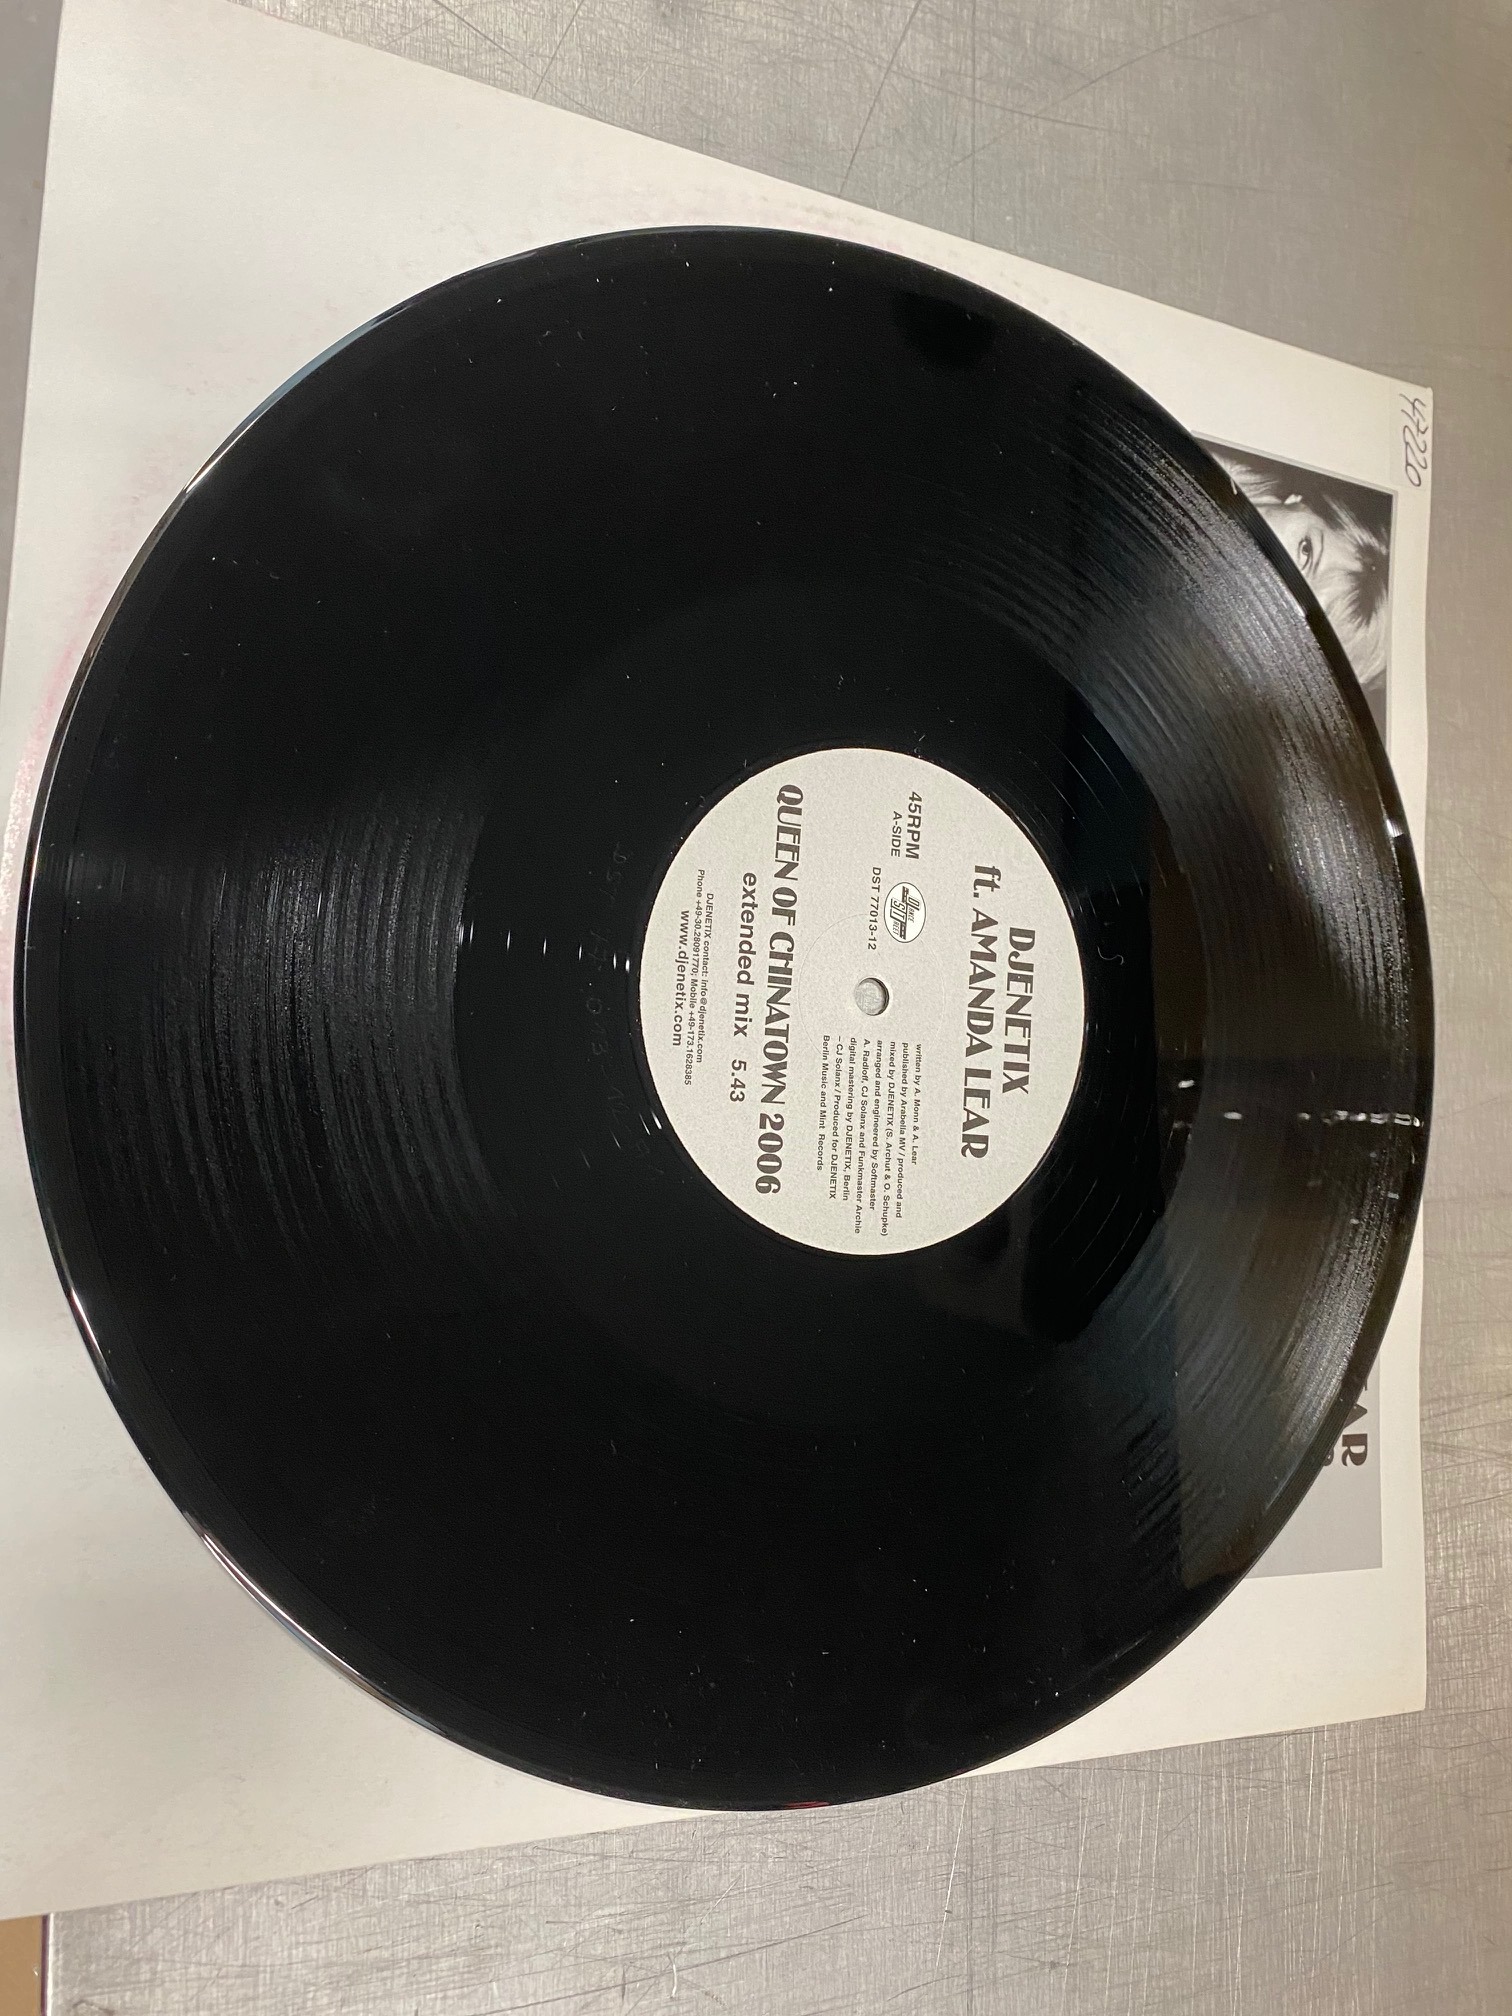 Vinyl - Djenetix feat Amanda Lear Titel - Queen of Chinatown.jpg